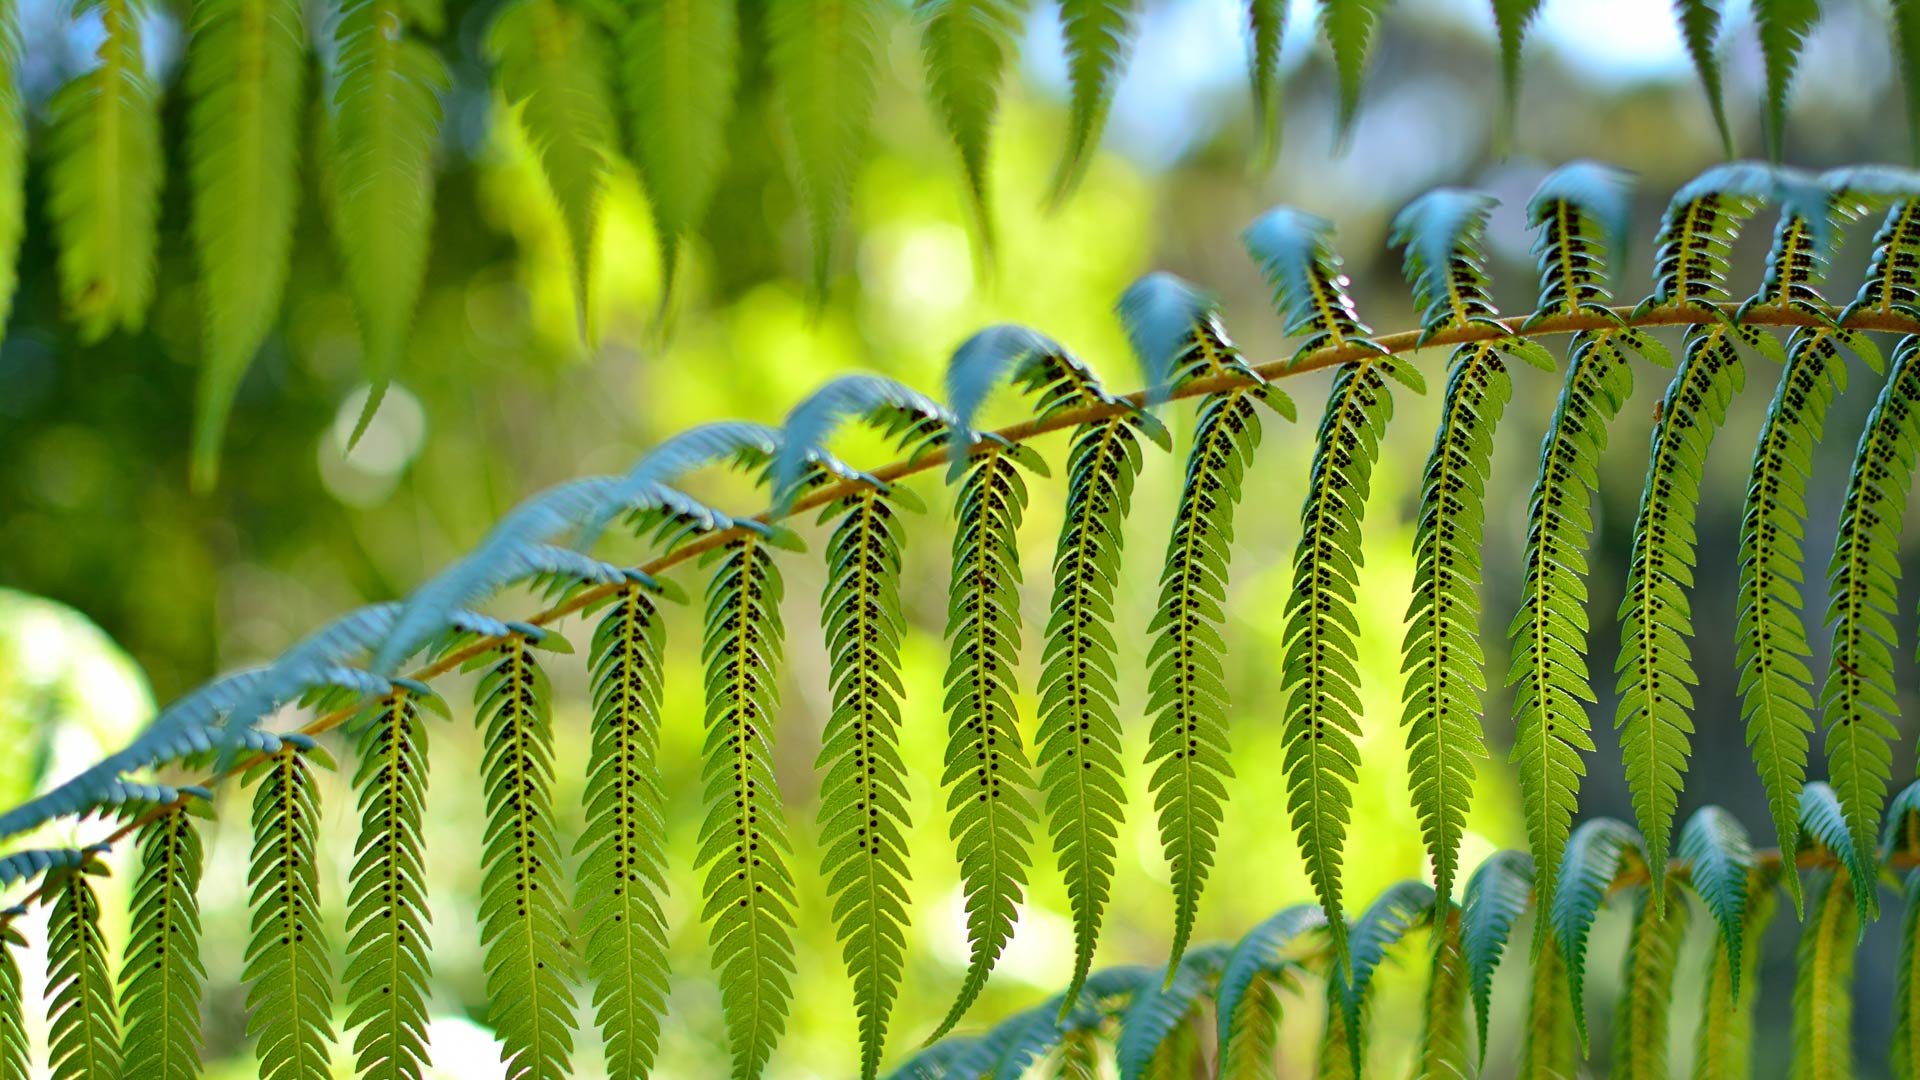 Ferns: Native plants